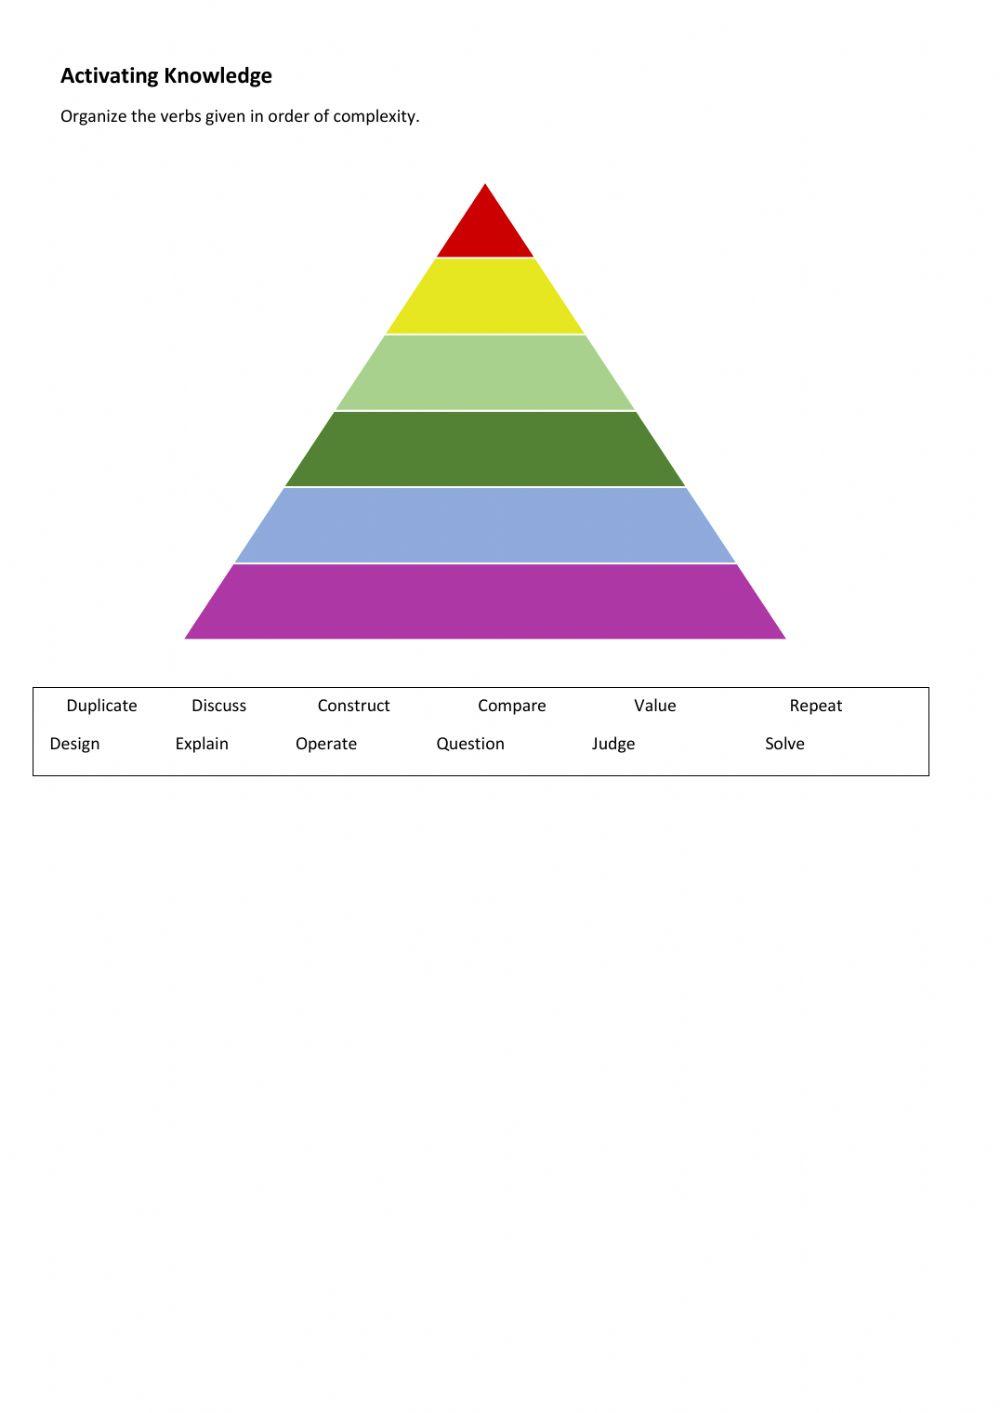 Bloom's pyramid